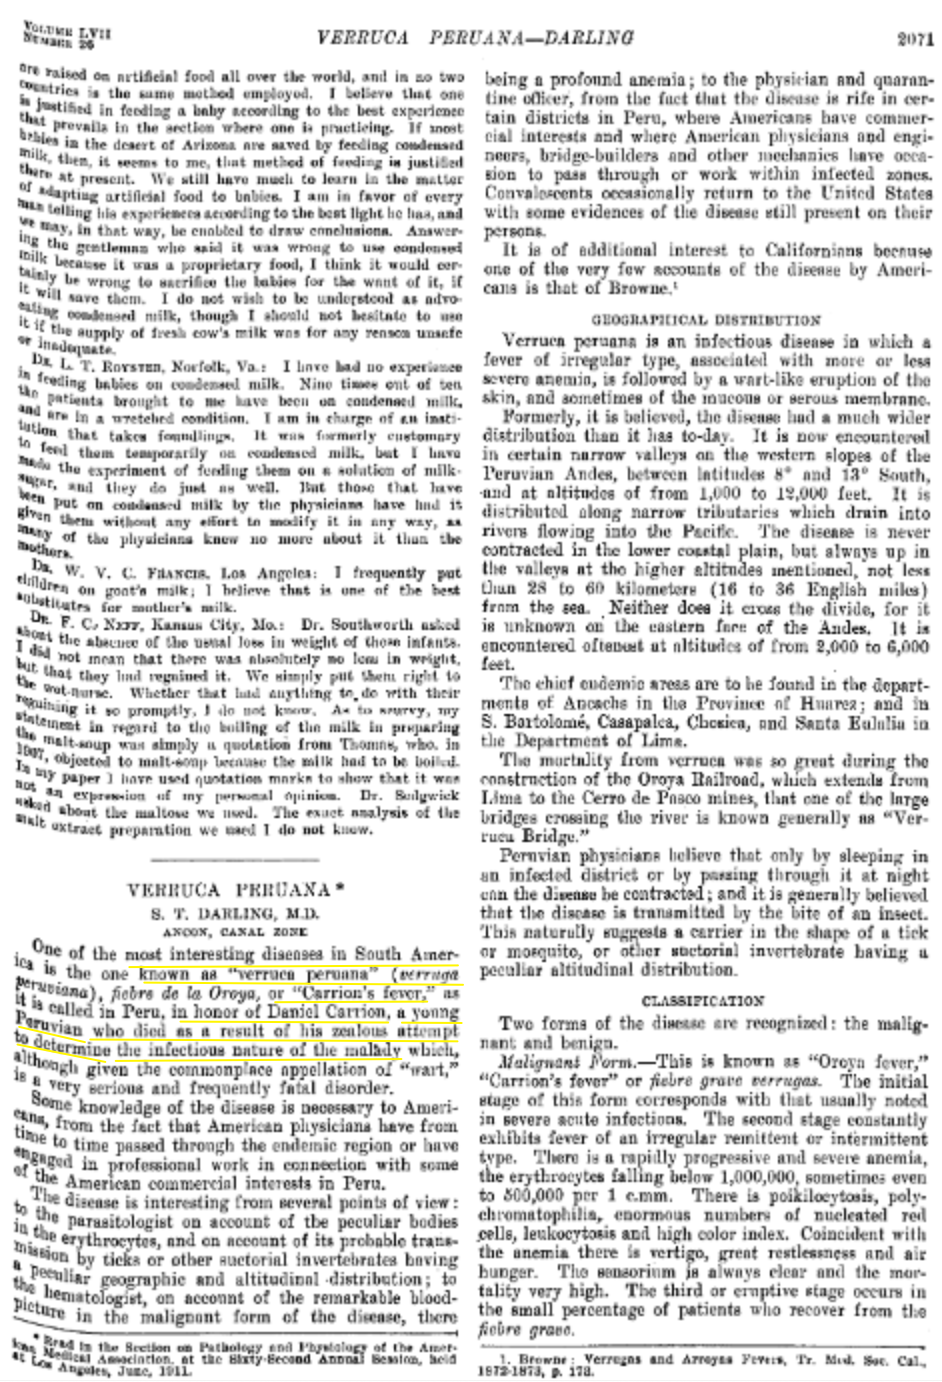 1911 description of Carrion's disease in JAMA